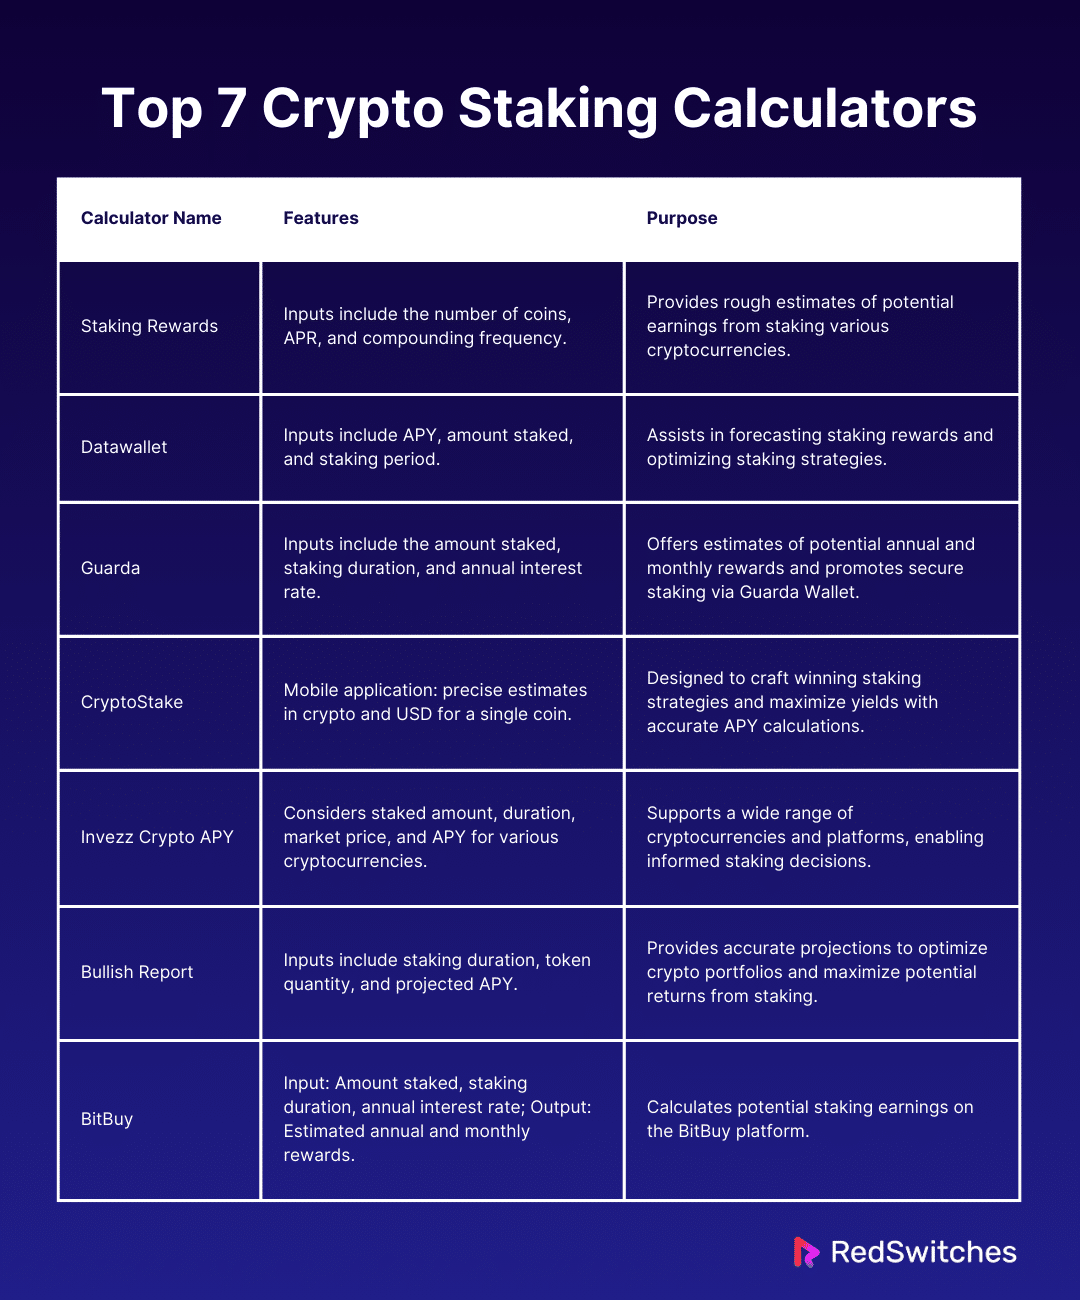 Top 7 Crypto Staking Calculators